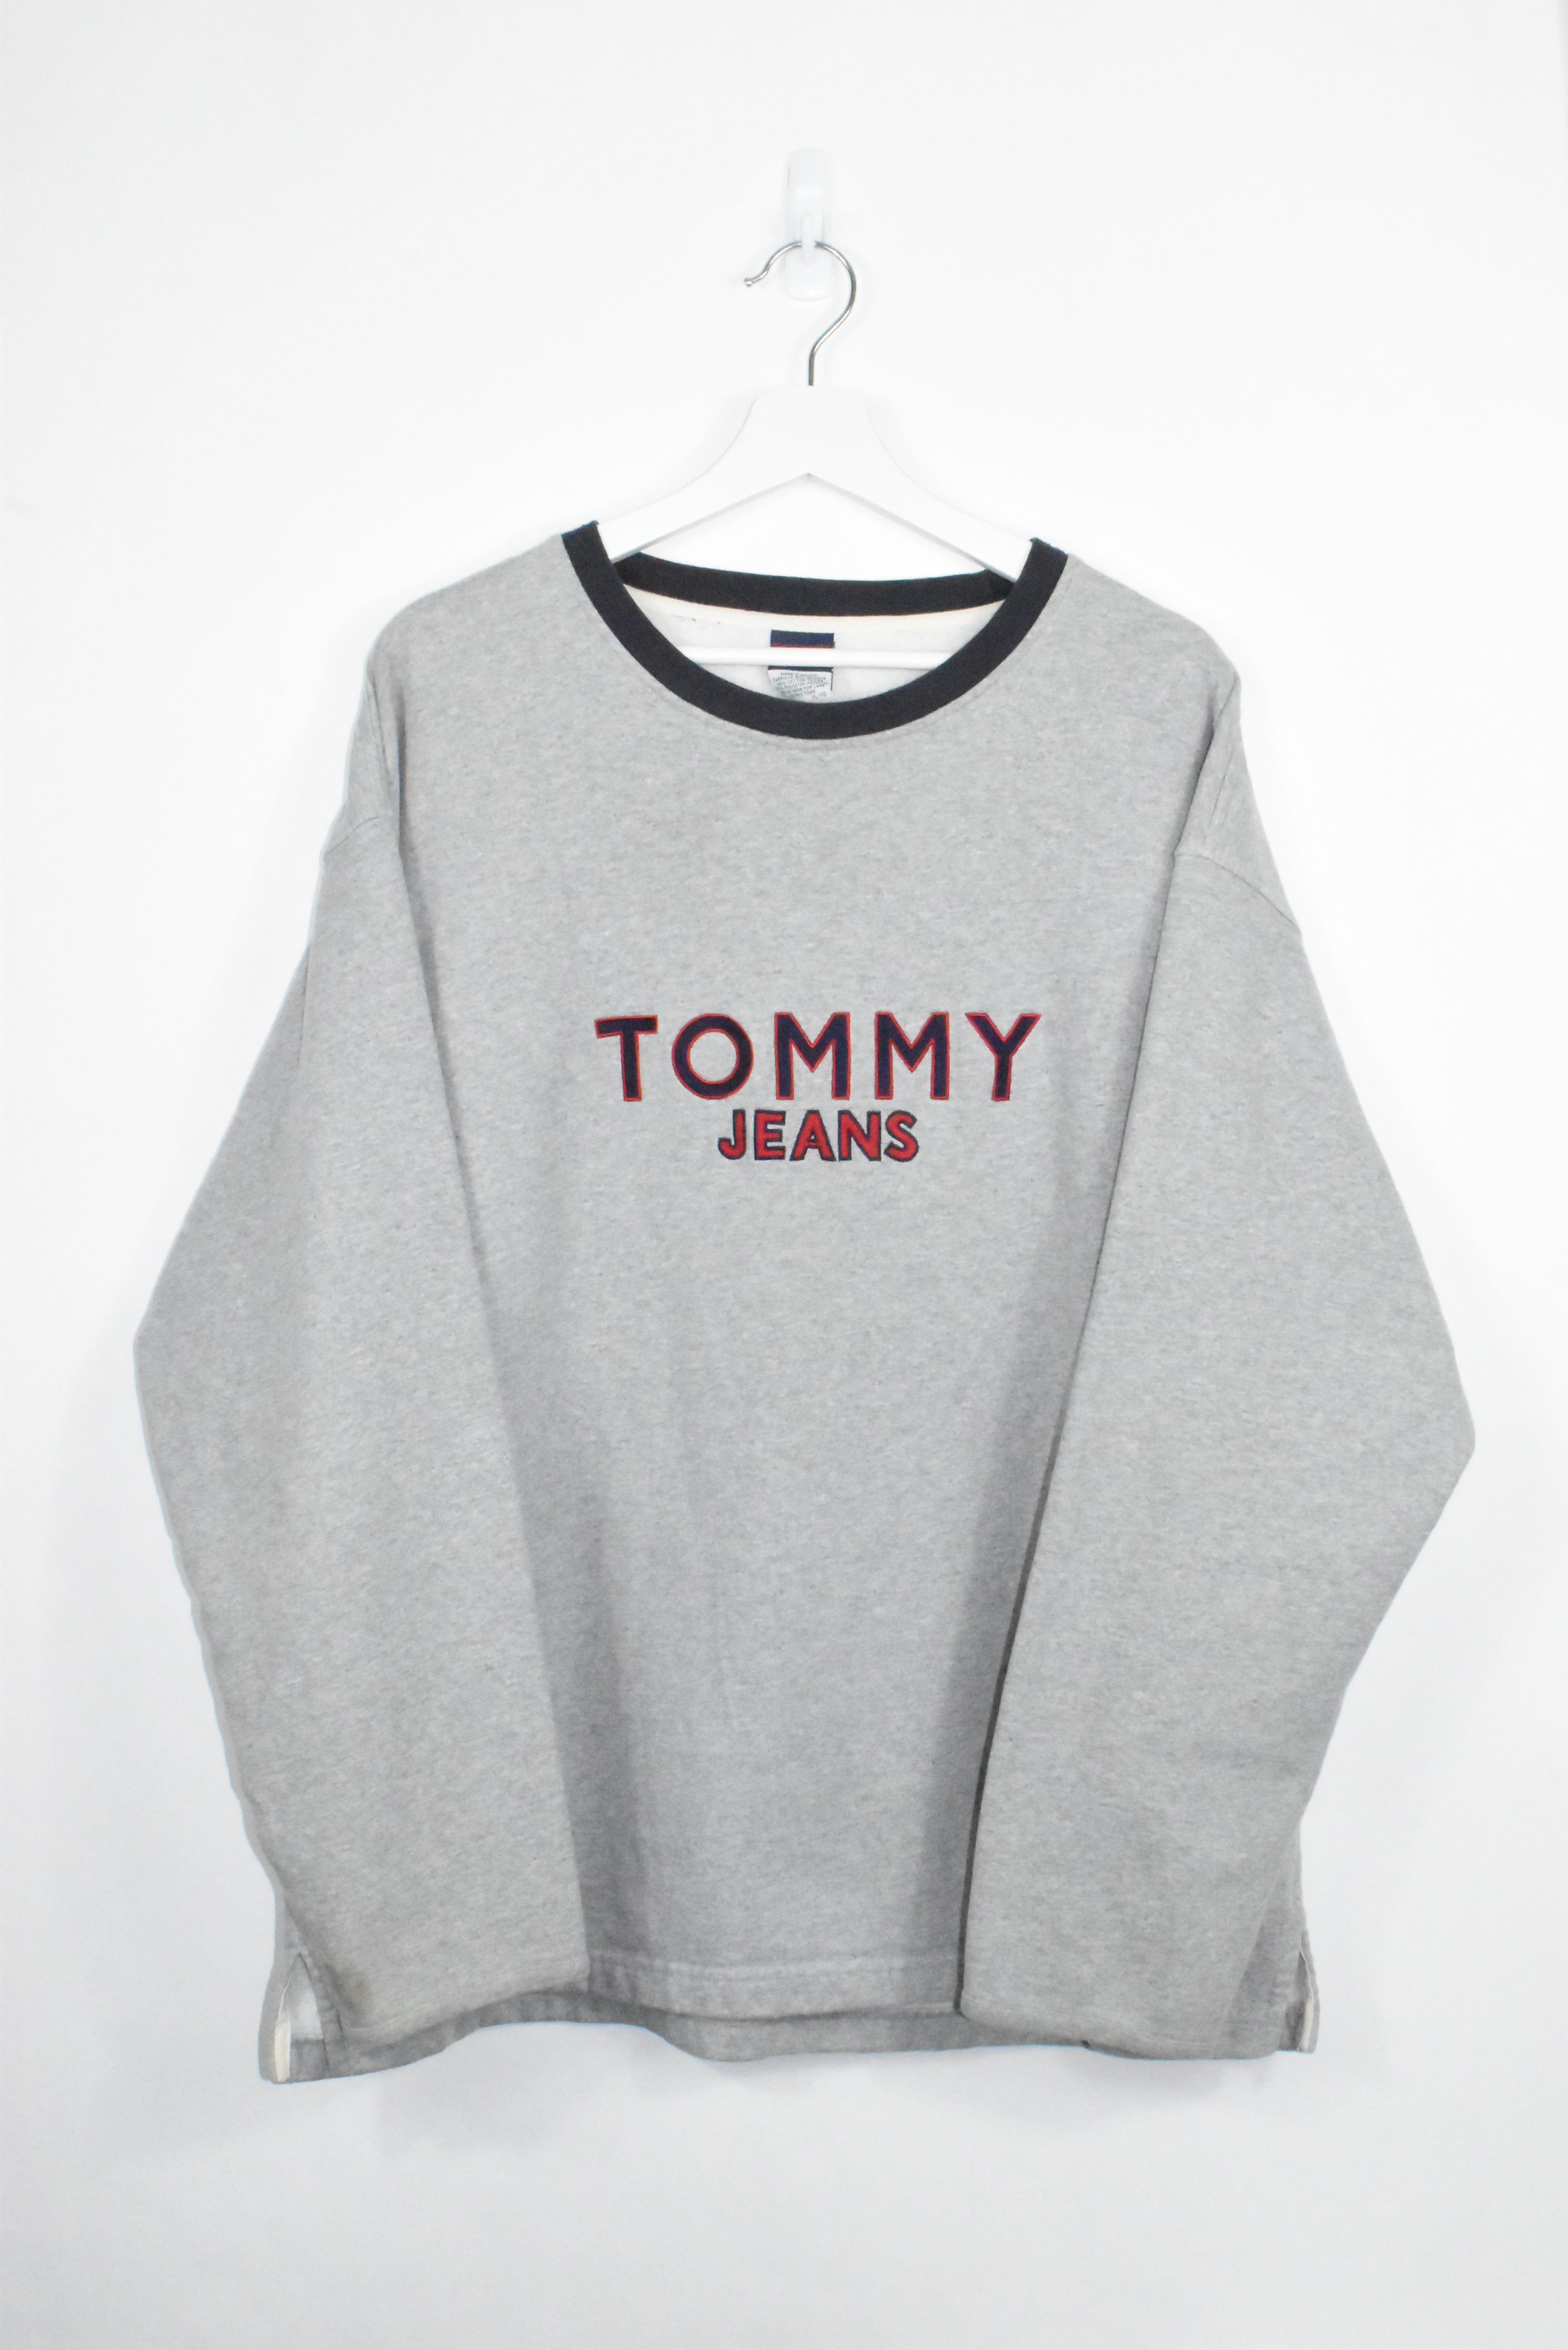 Vintage Tommy Jeans Embroidered Spellout Sweatshirt XL - REVIVED Vintage est. 2020